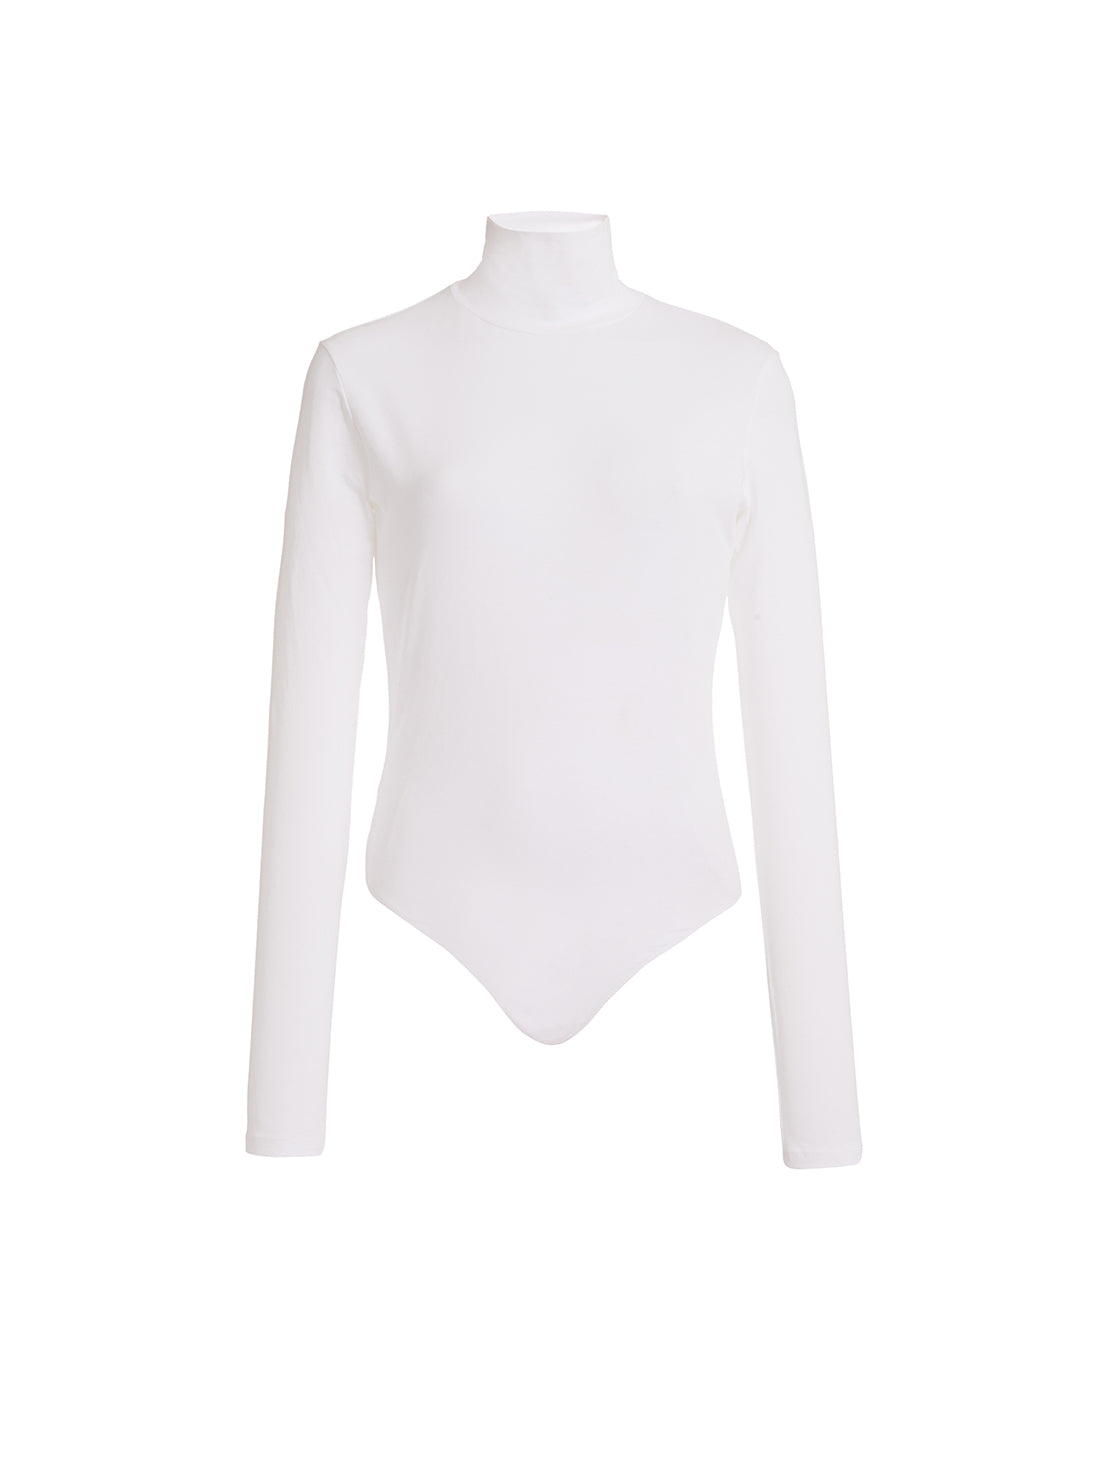 Wishful Heart White Turtleneck Bodysuit FINAL SALE  White turtleneck  sweater, Bodycon fashion, White turtleneck